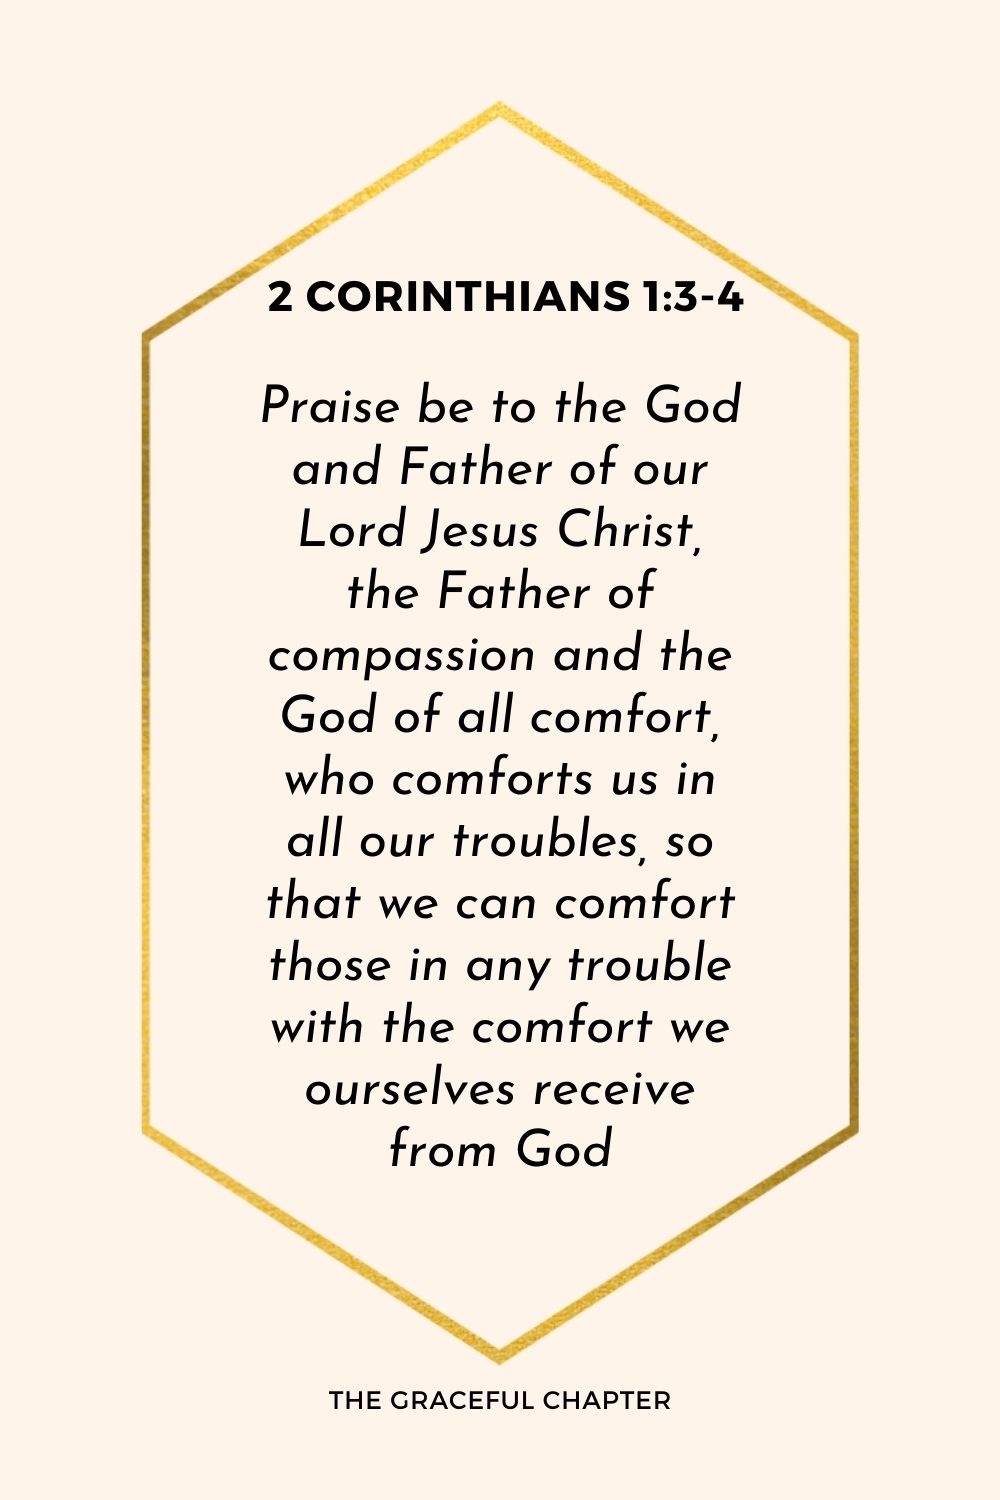 2 Corinthians 1:3-4 